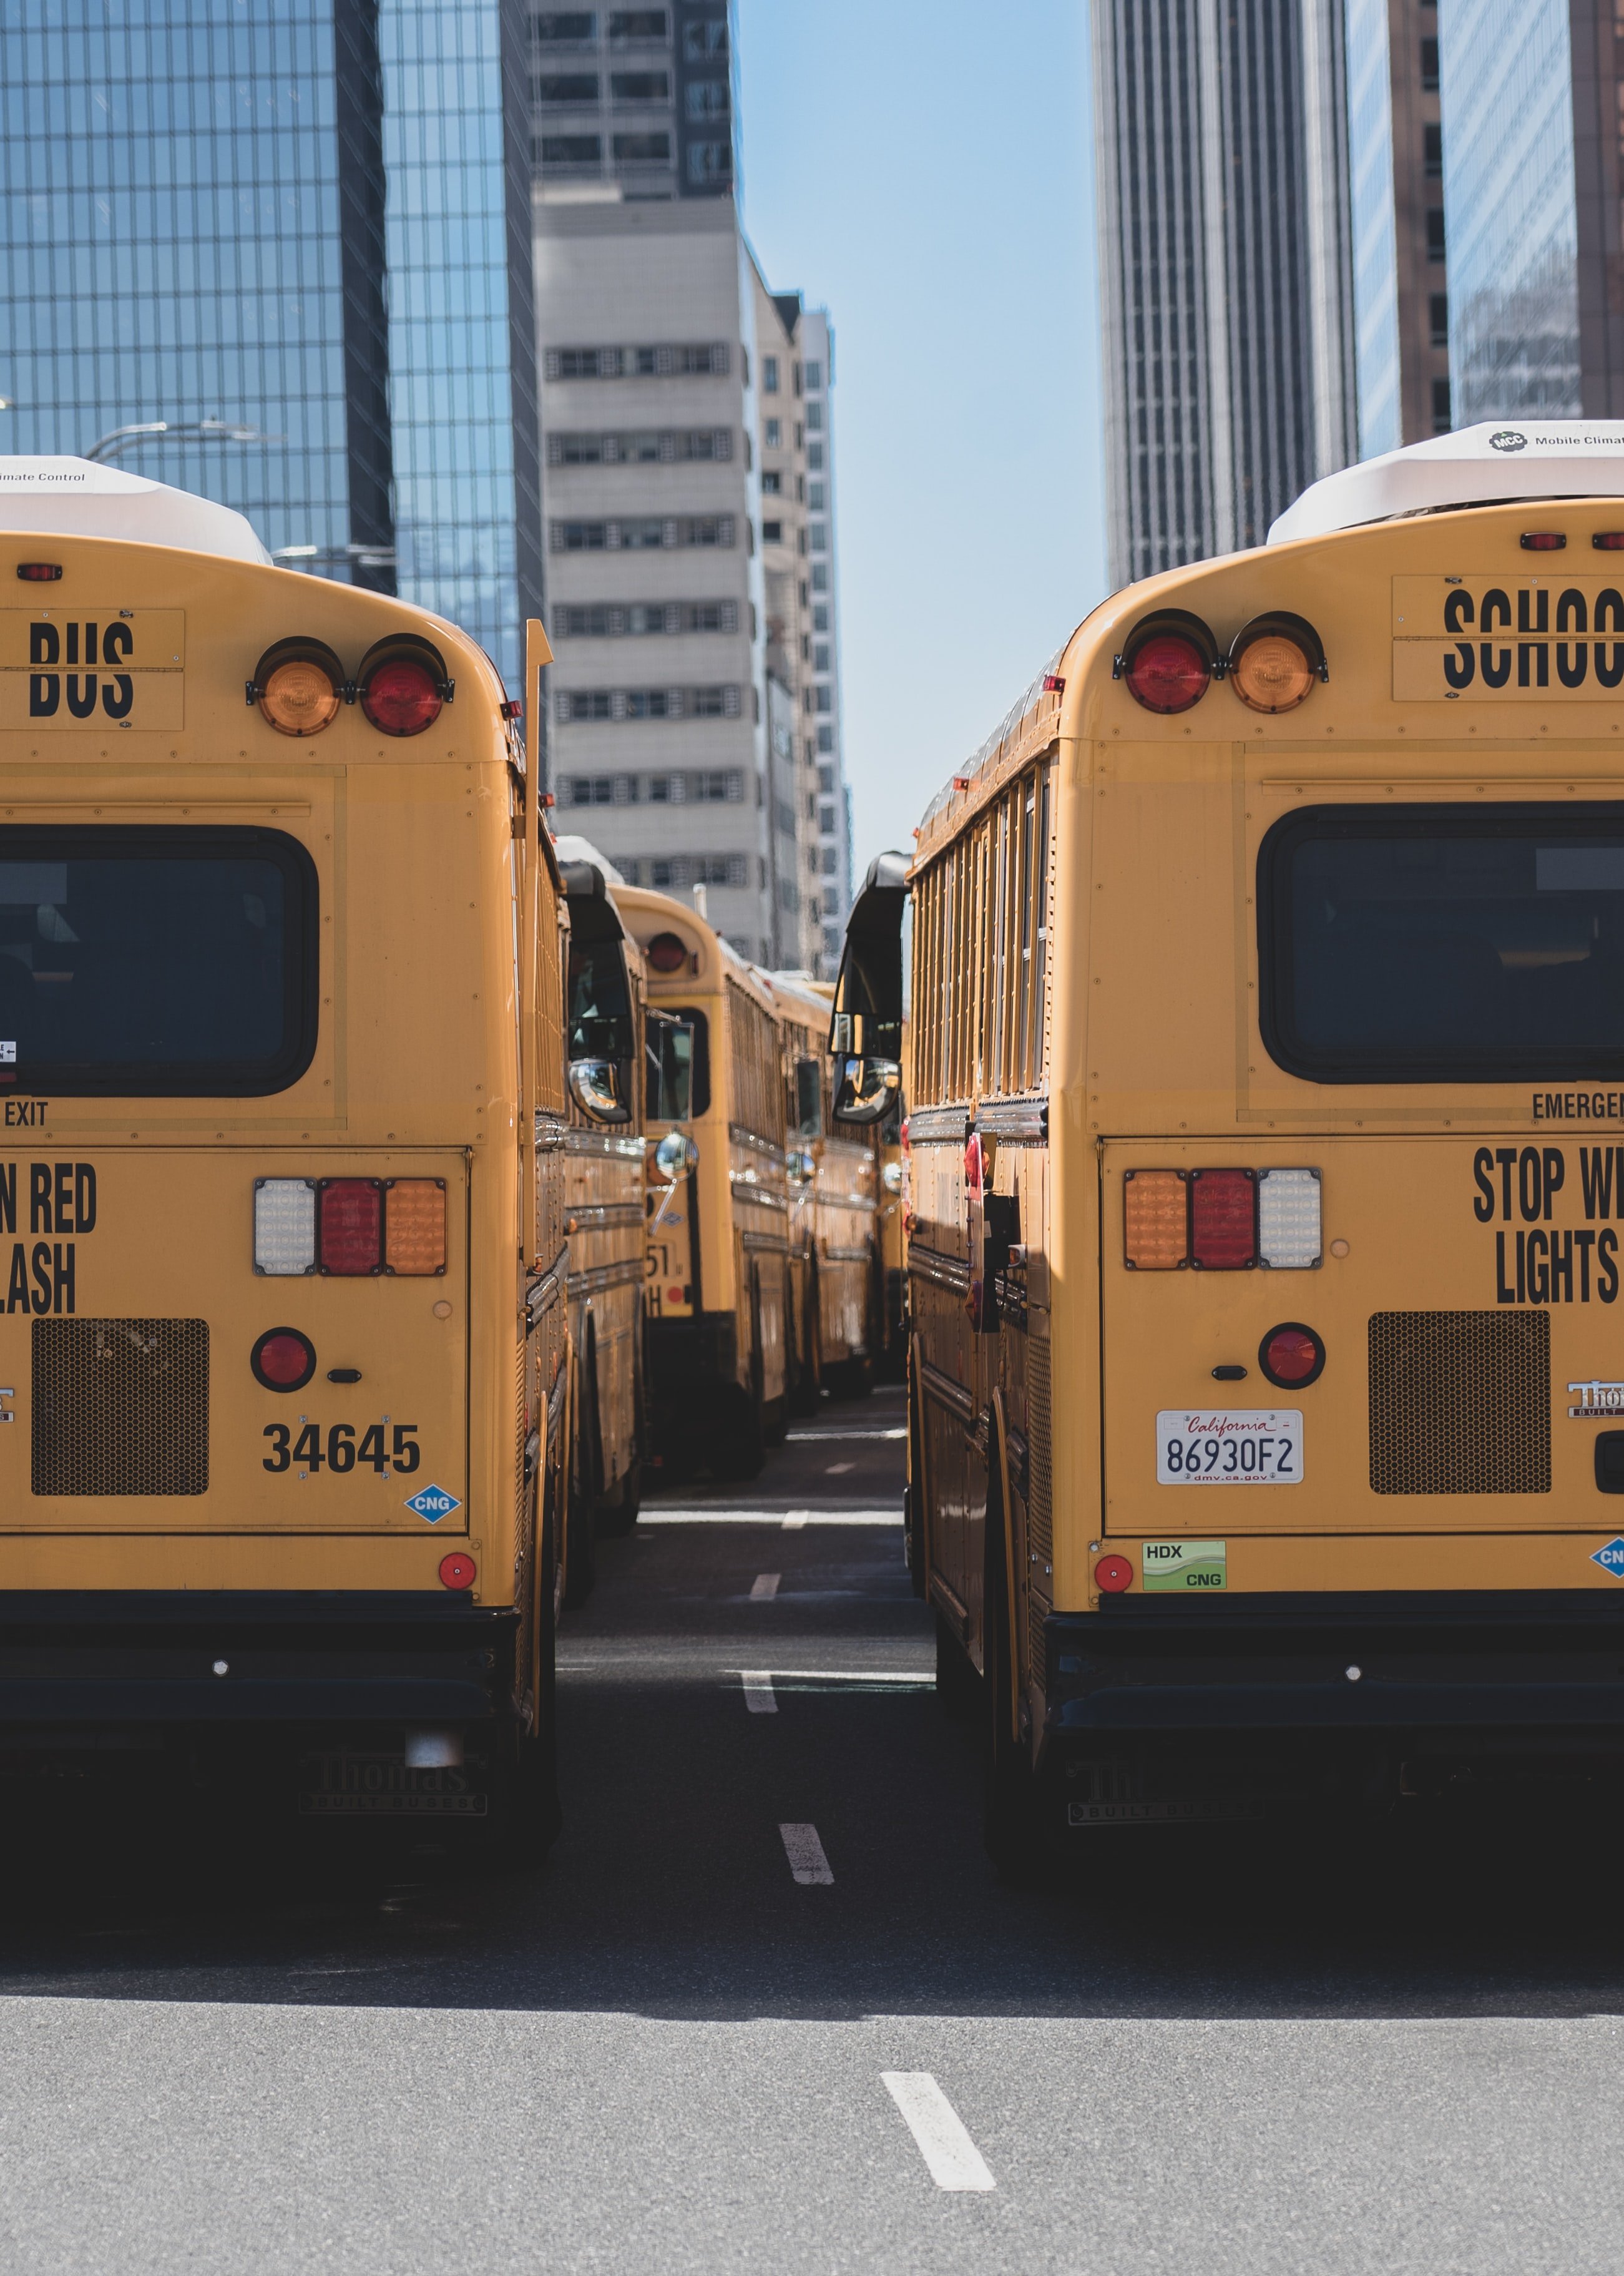 School buses on the road | Source: Unsplash